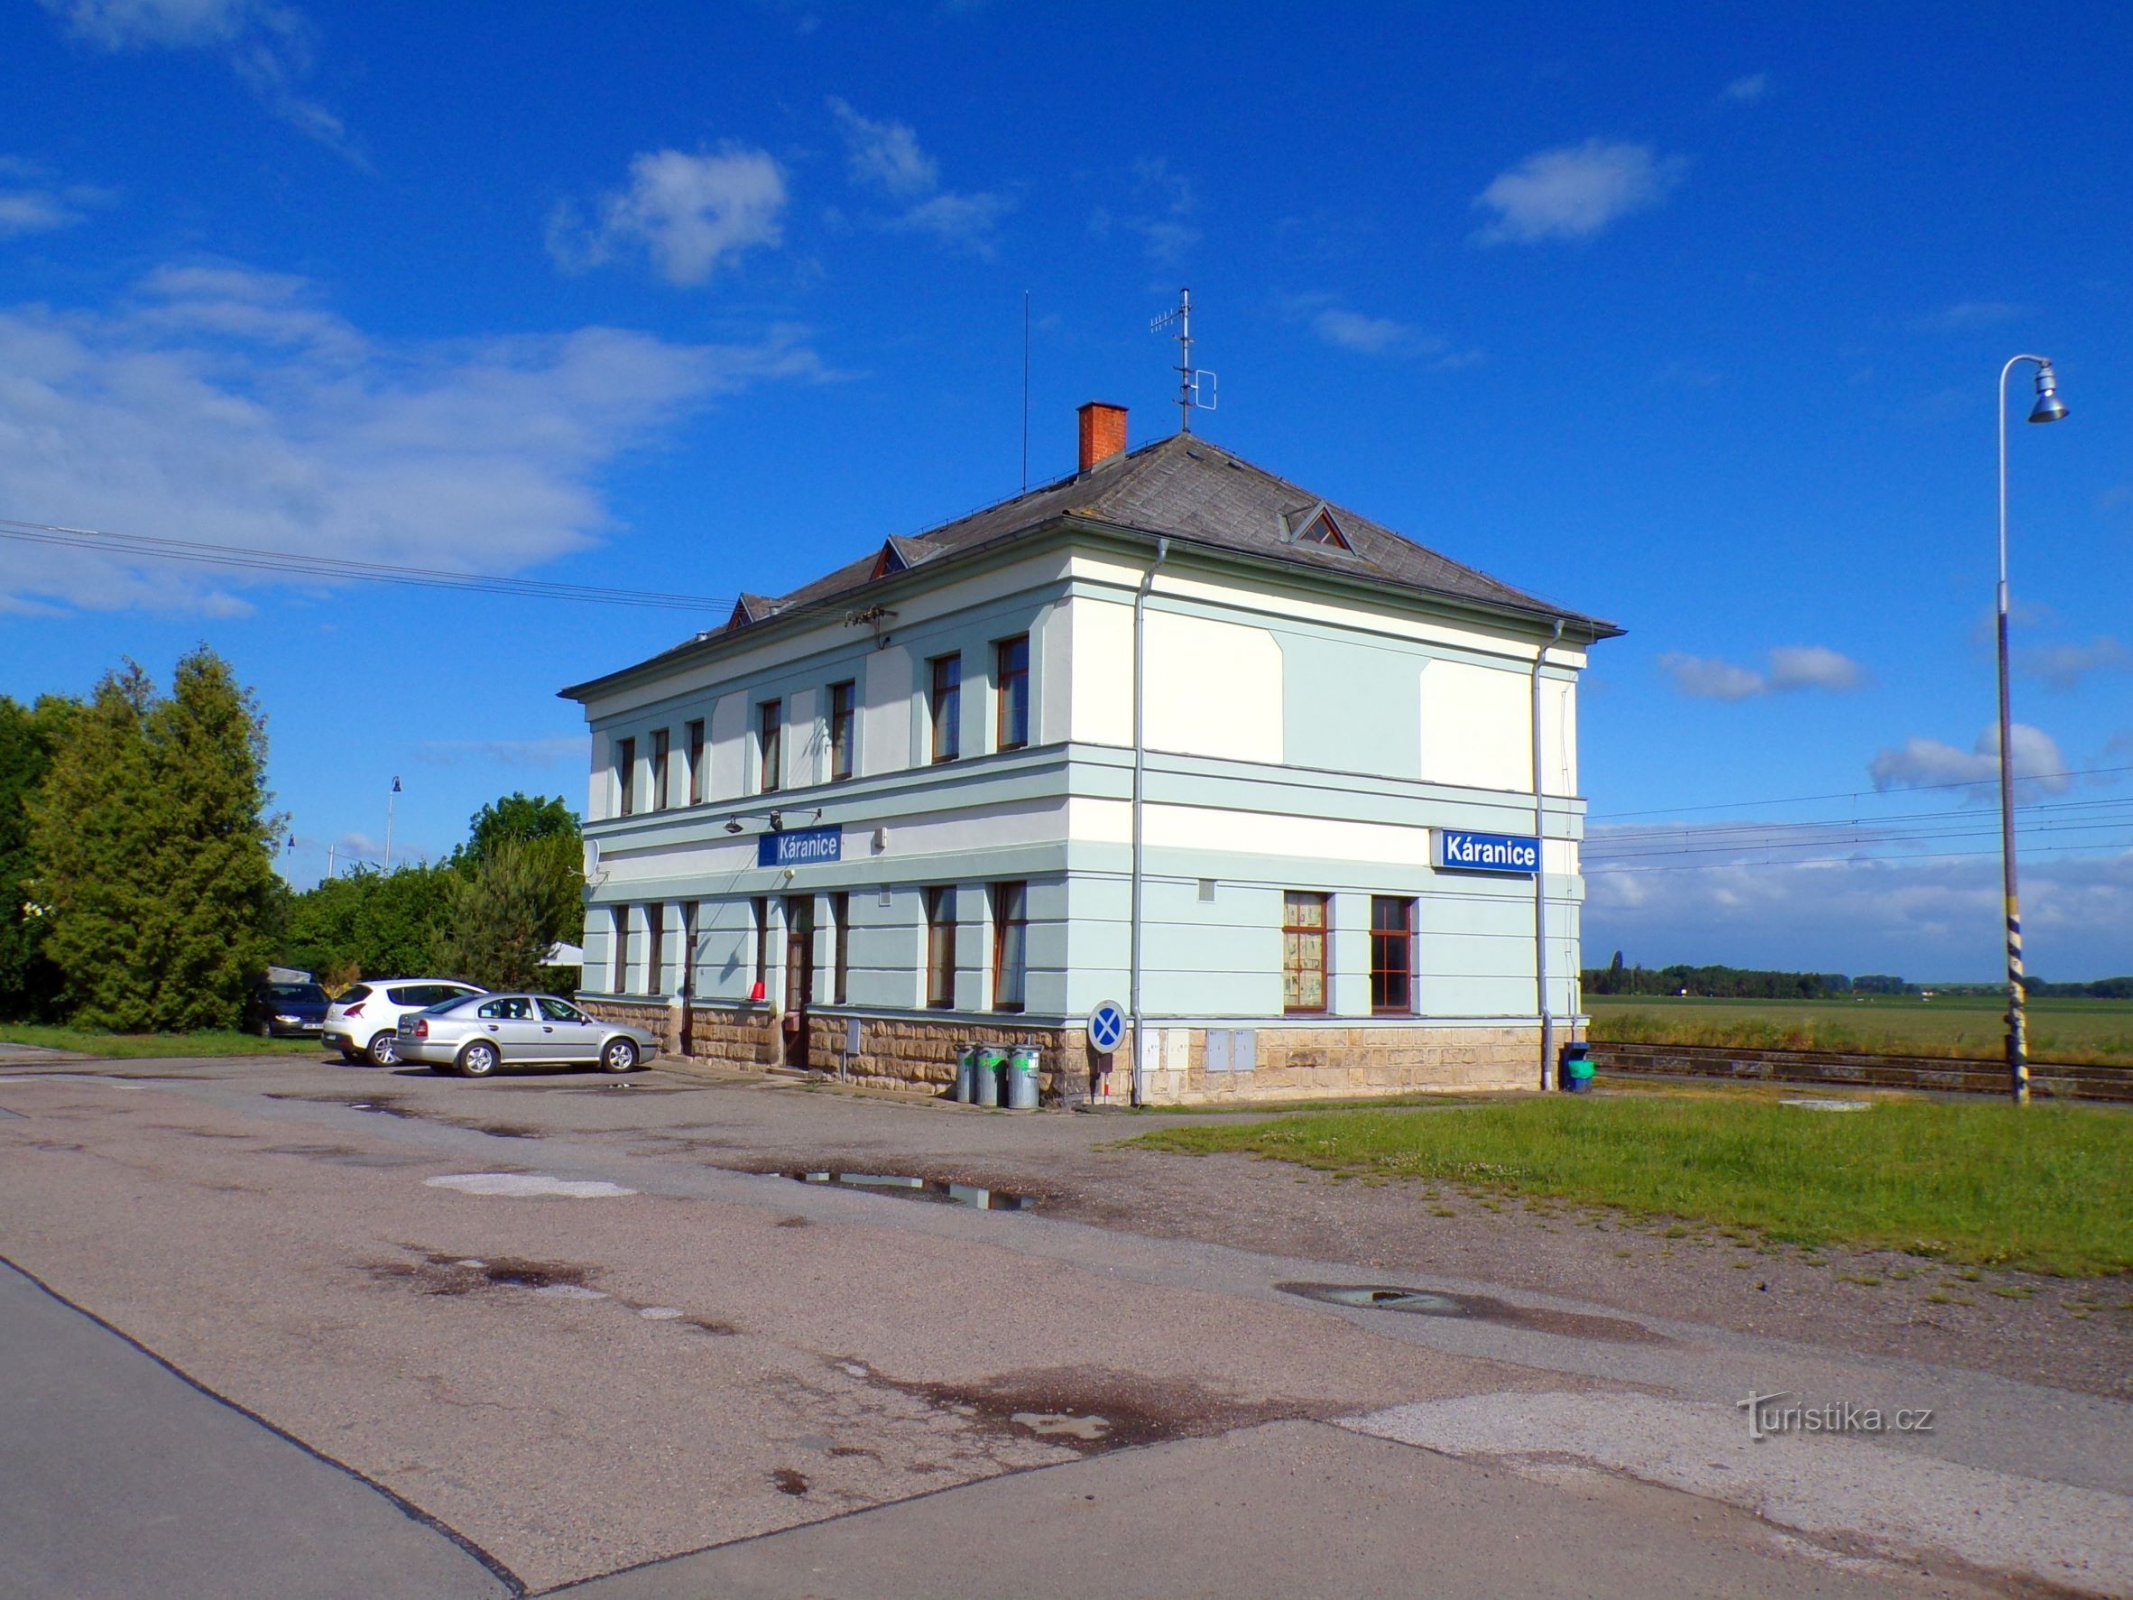 Edifício da estação (Káranice, 29.5.2022/XNUMX/XNUMX)